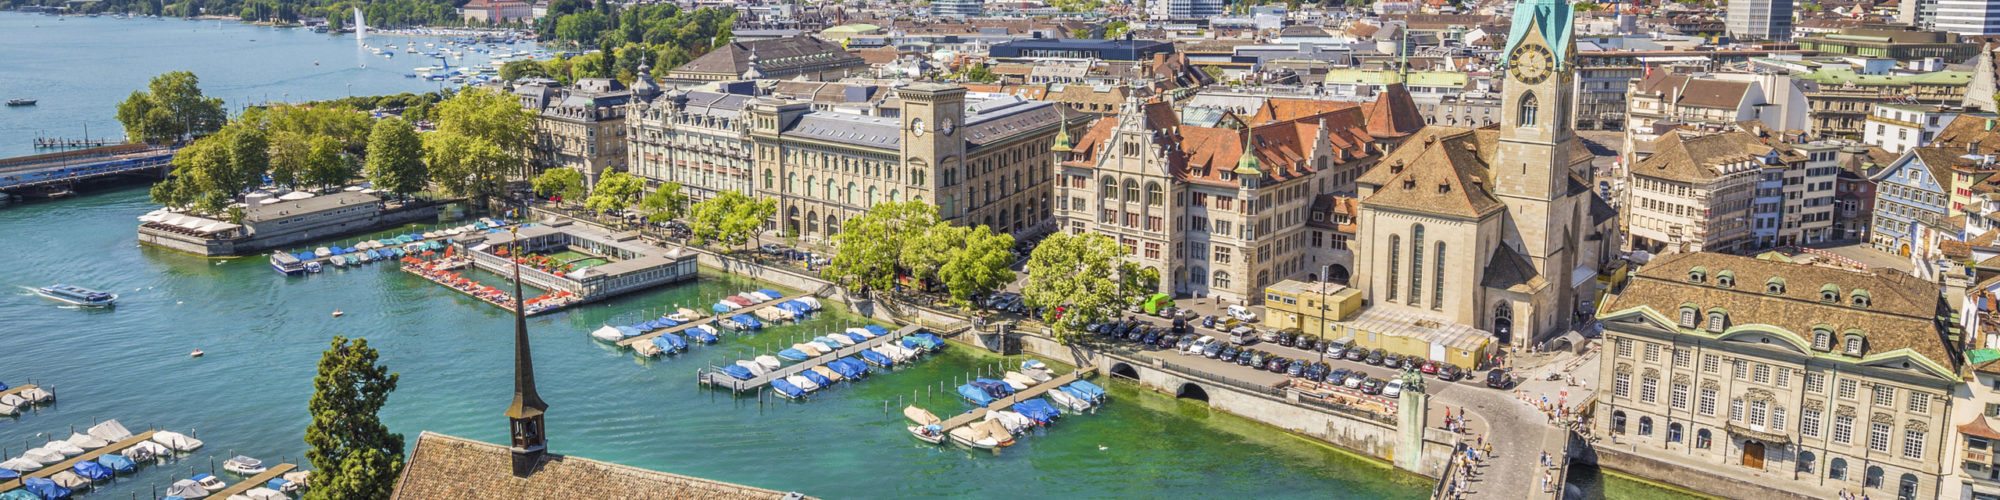 Zurich Travel travel agents packages deals